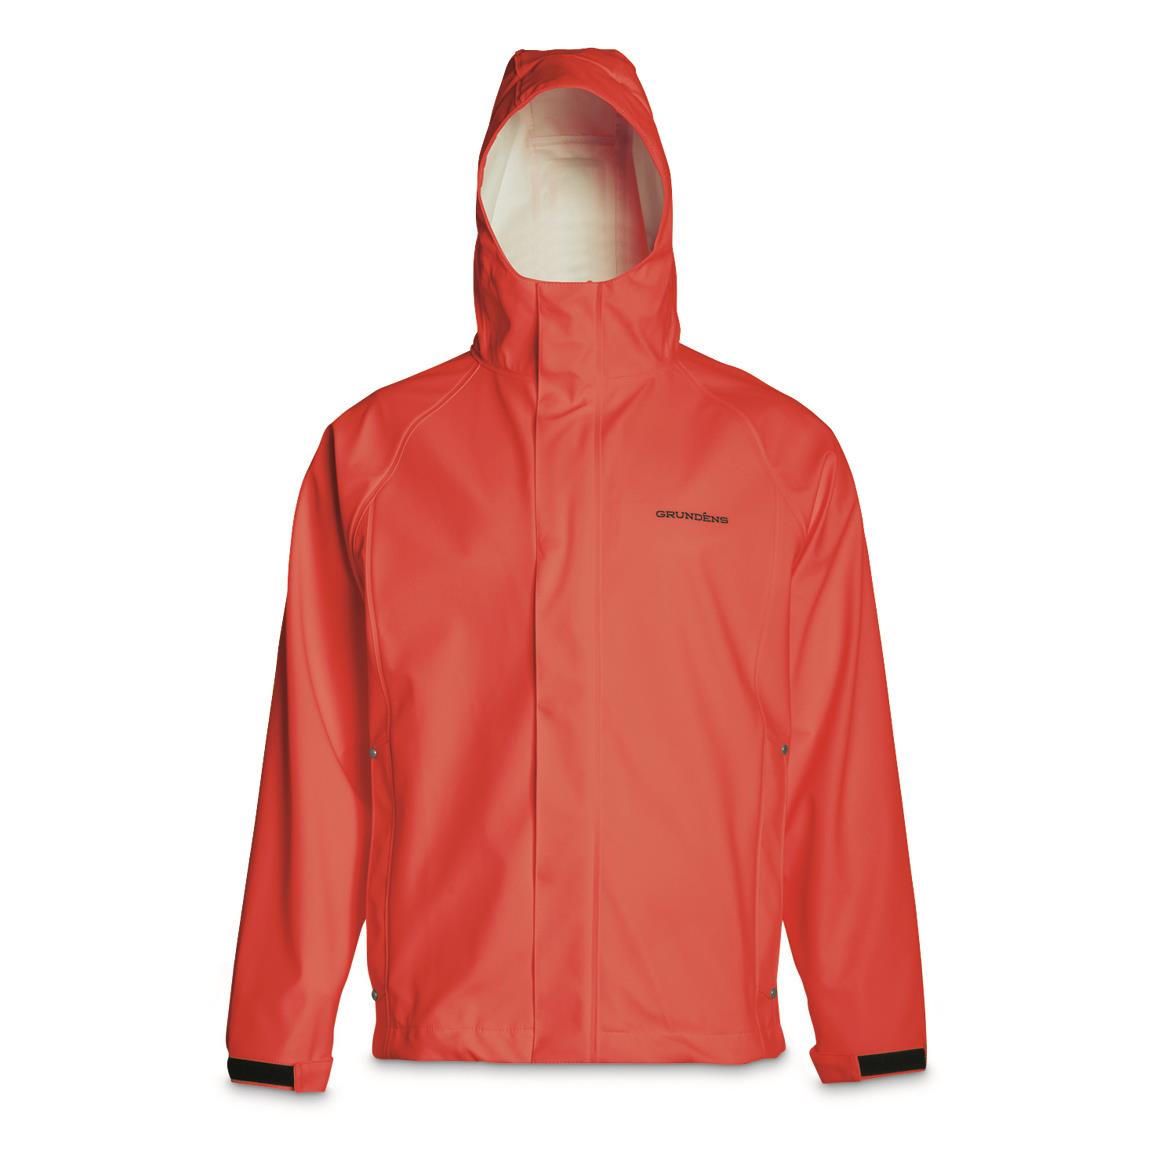 Grundens Men's Neptune 319 Commercial Fishing Waterproof Jacket, Orange